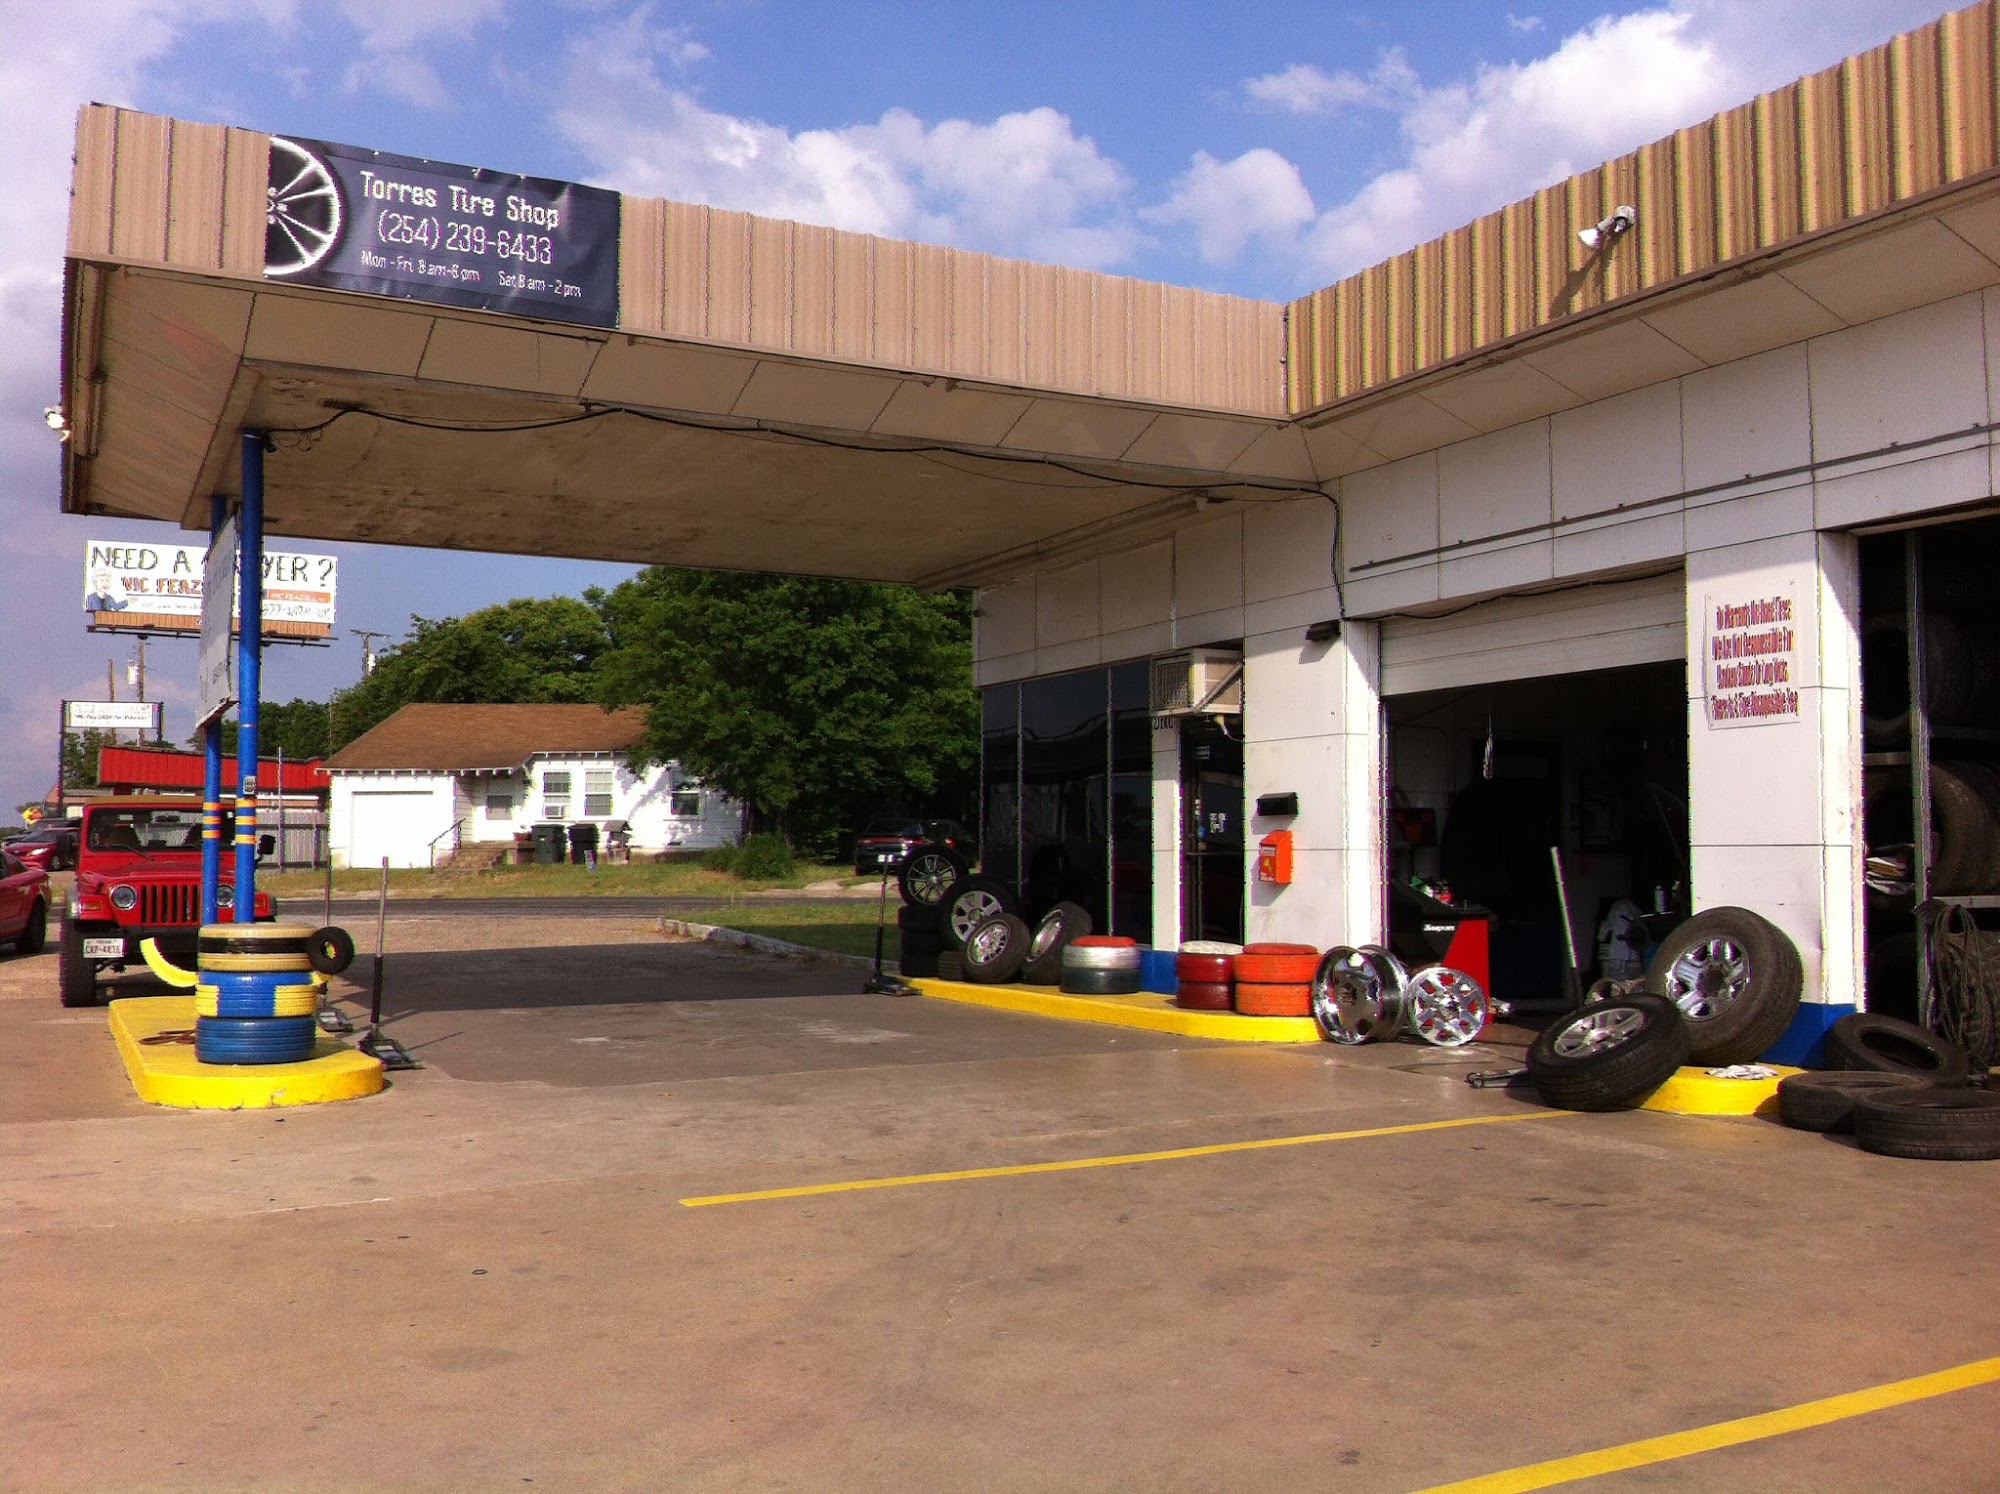 Torres Tire Shop